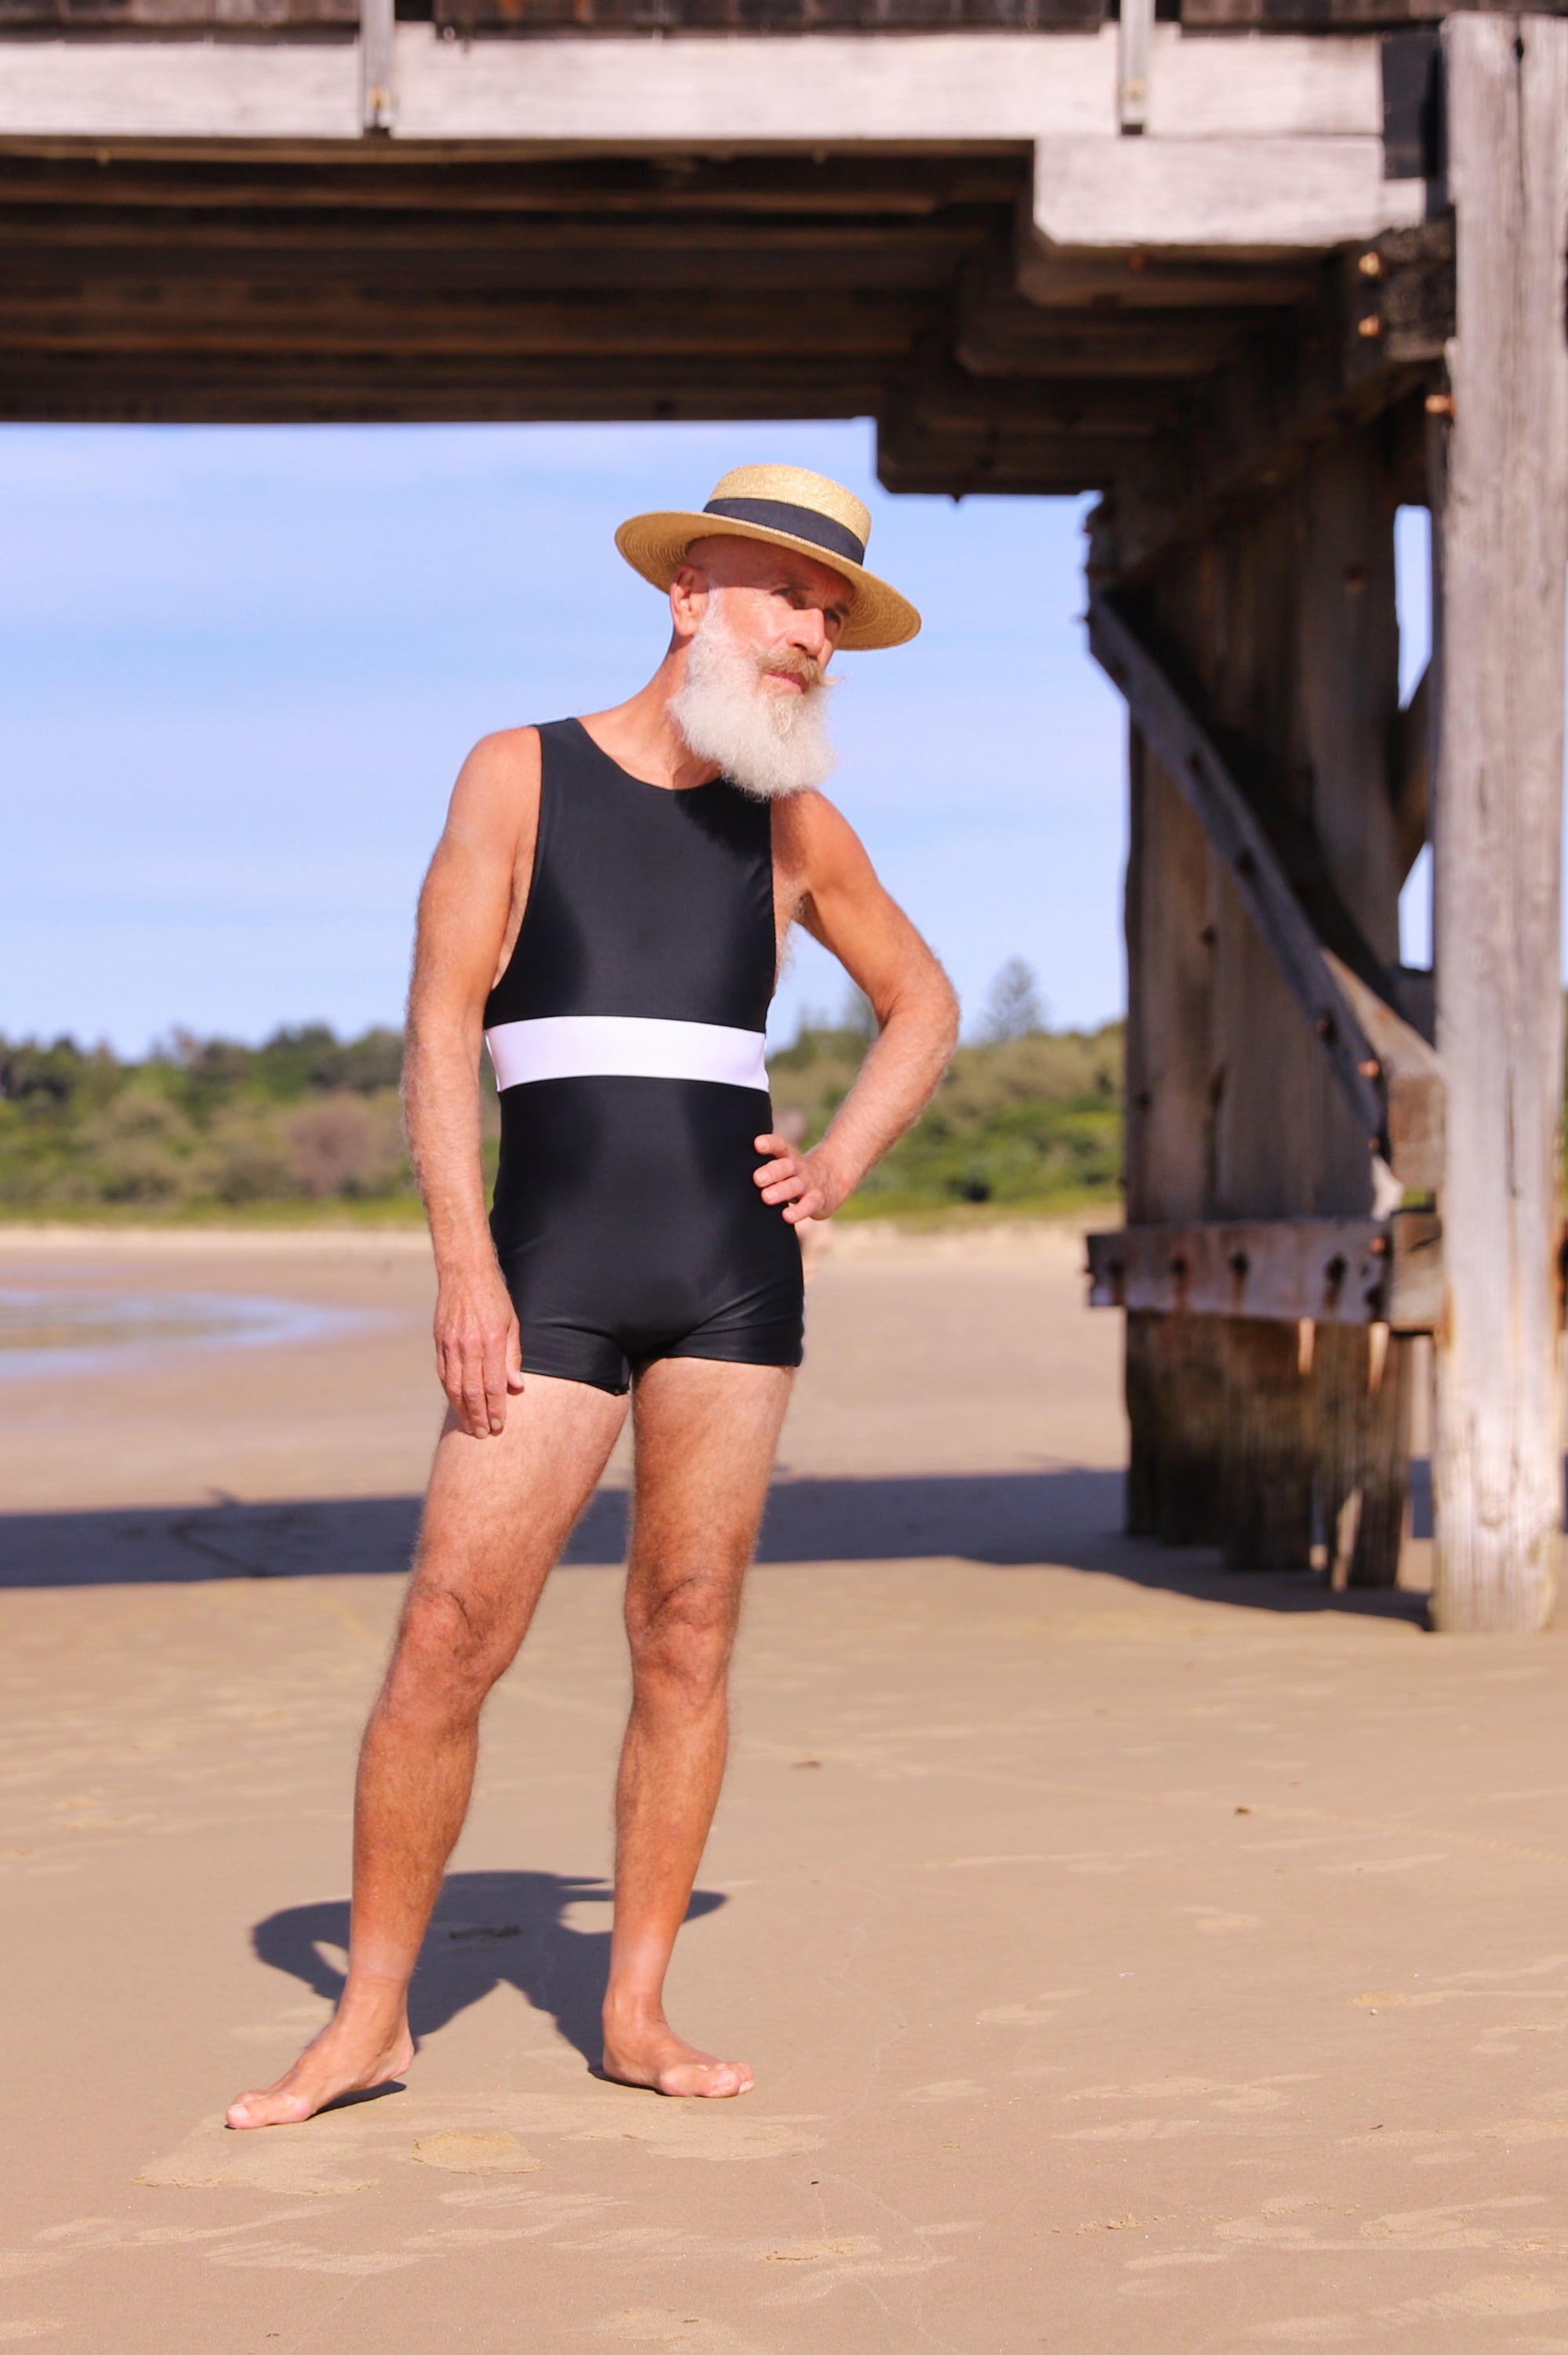 One-piece Diving Suits Men Women Snorkeling Surfing Swimsuit Outdoor  Accessories | eBay